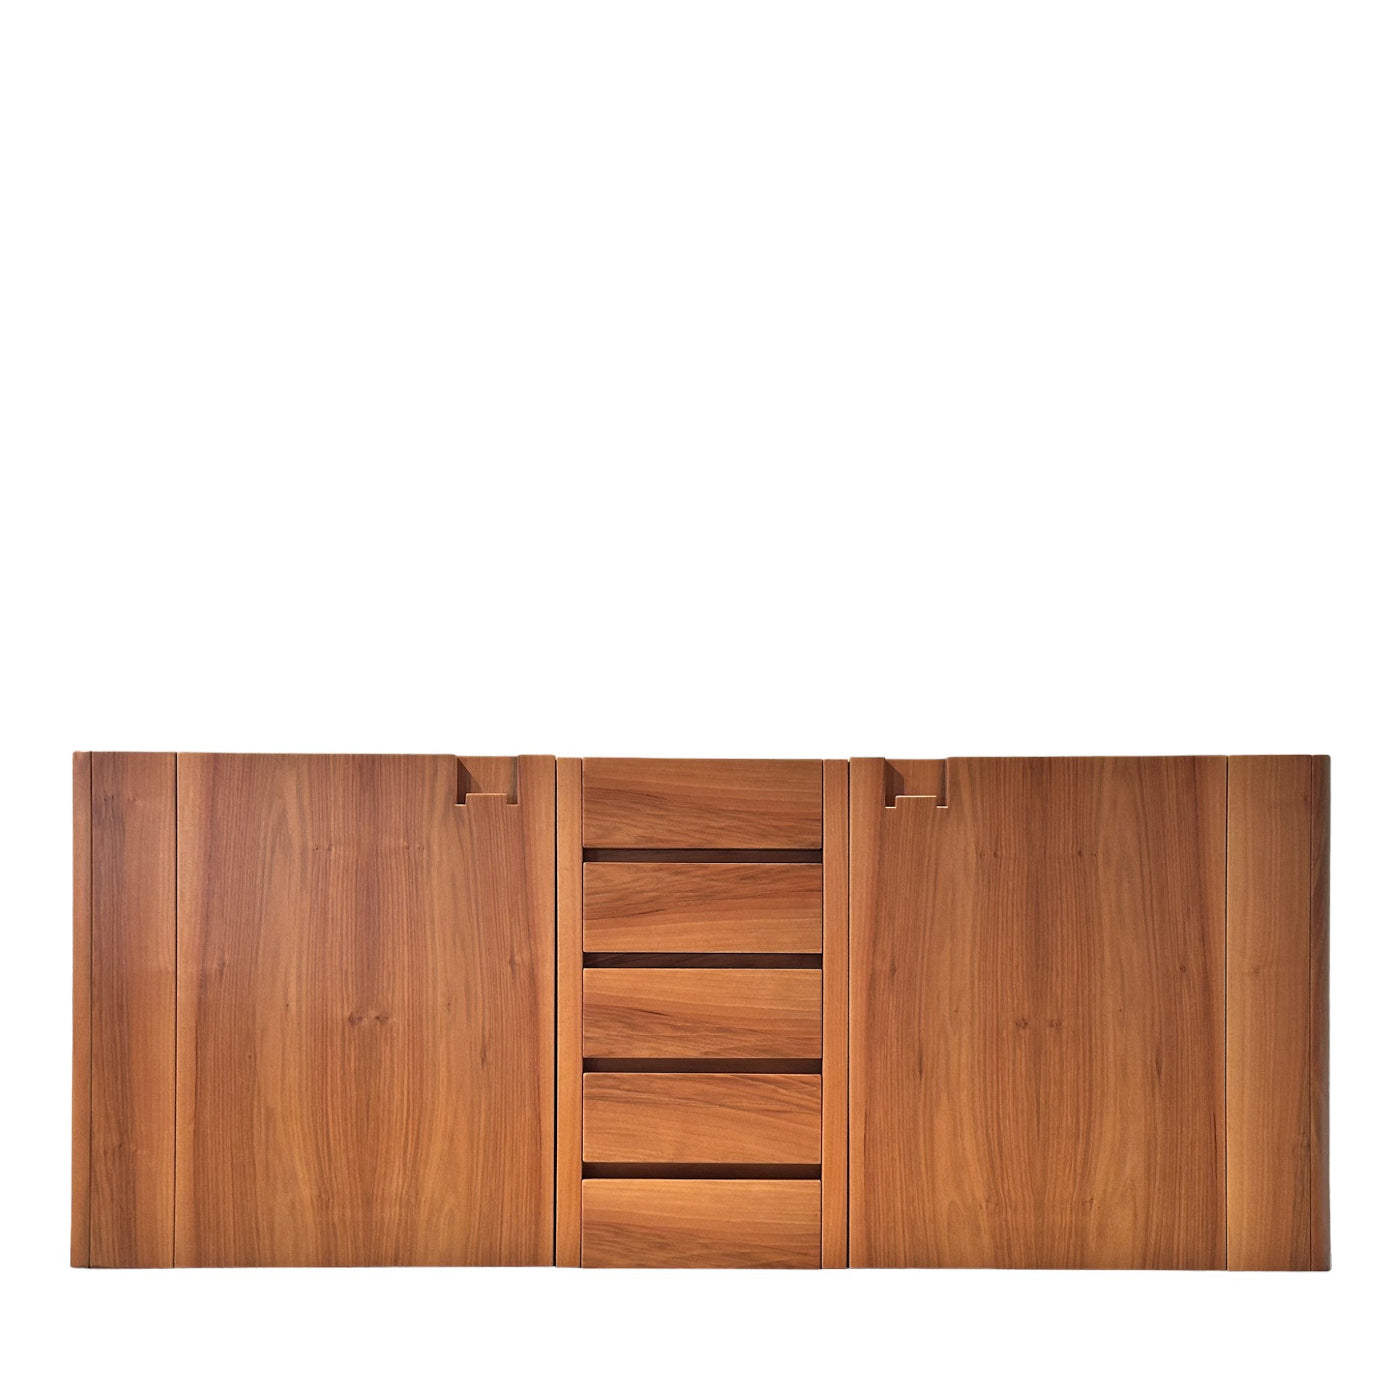 Boema 200 2-Door Walnut Sideboard with Drawers - Alternative view 4